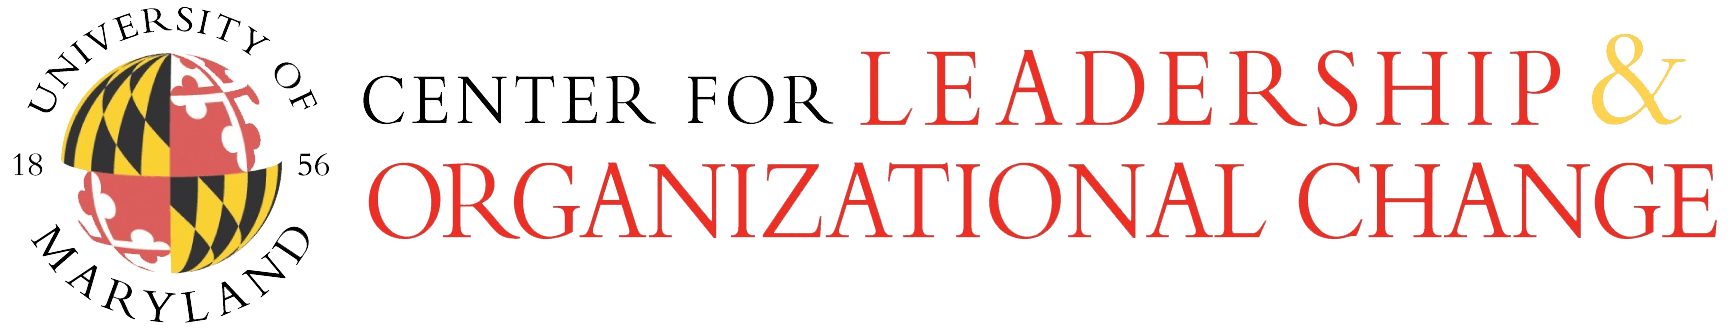 UMD Center for Leadership & Organizational Change logo